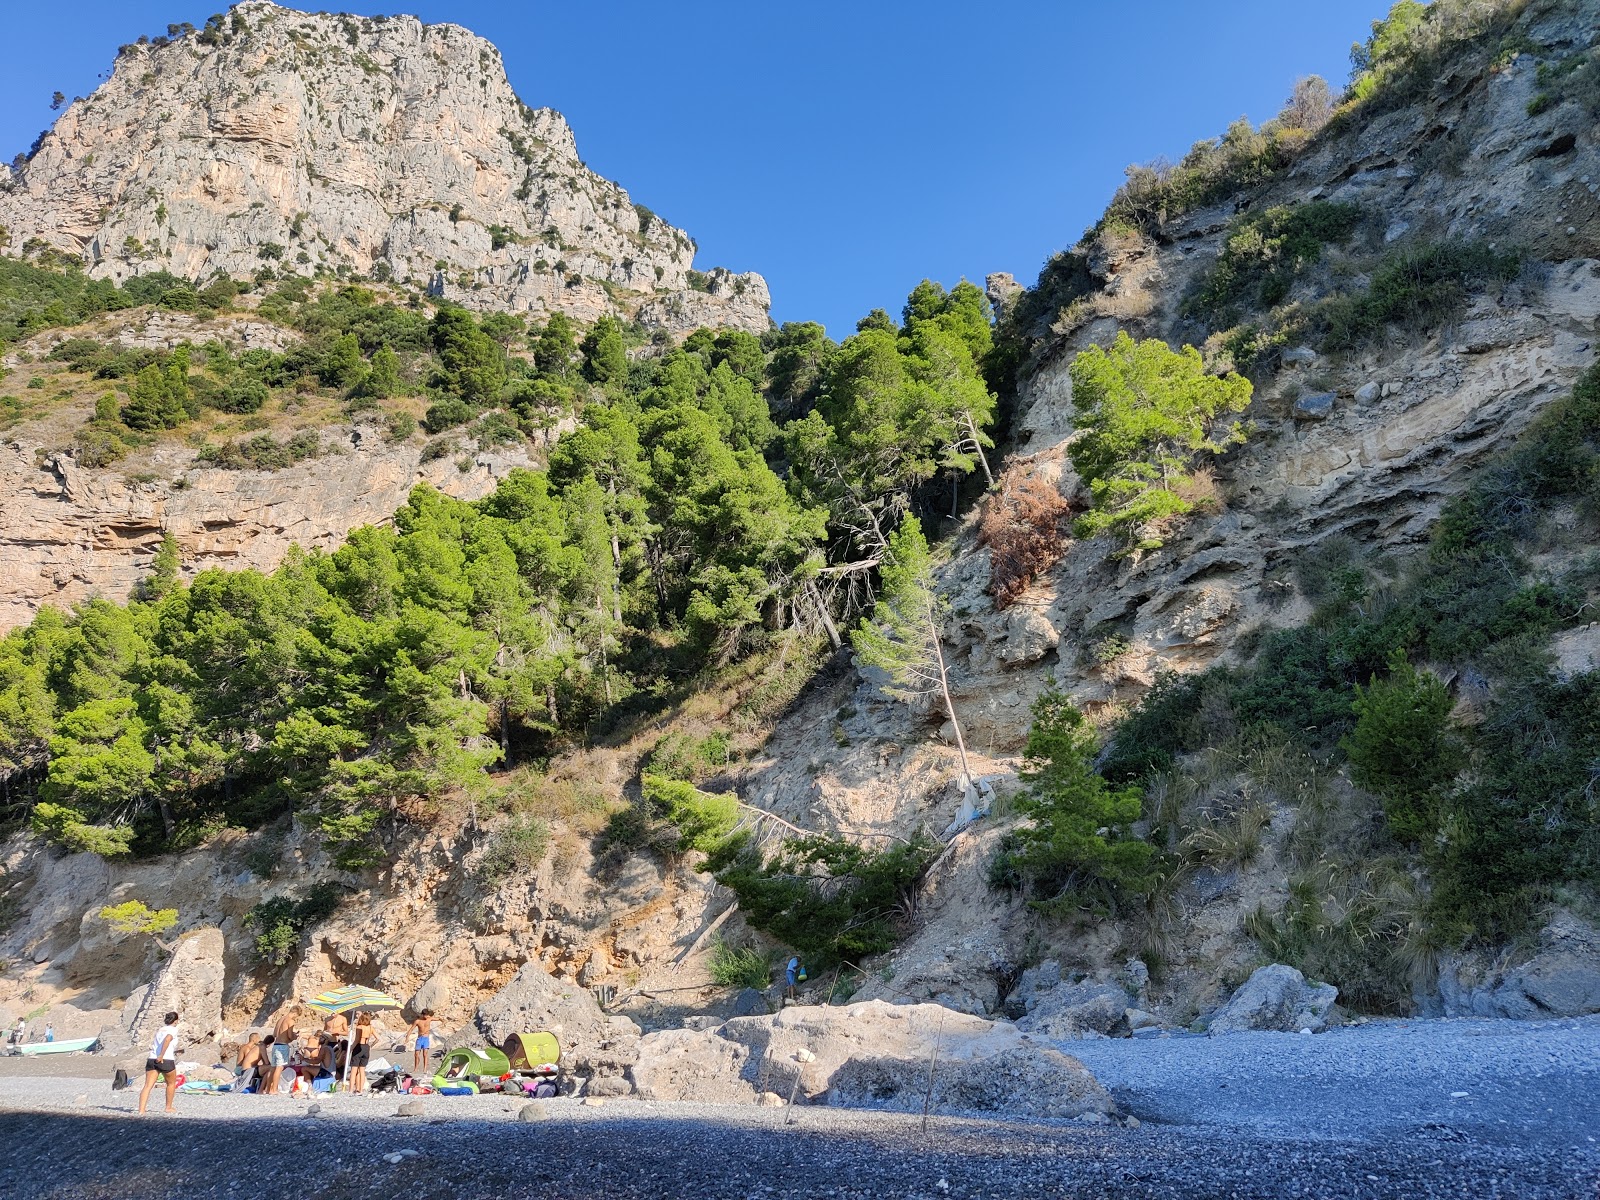 Foto de Spiaggia di Tordigliano - lugar popular entre los conocedores del relax